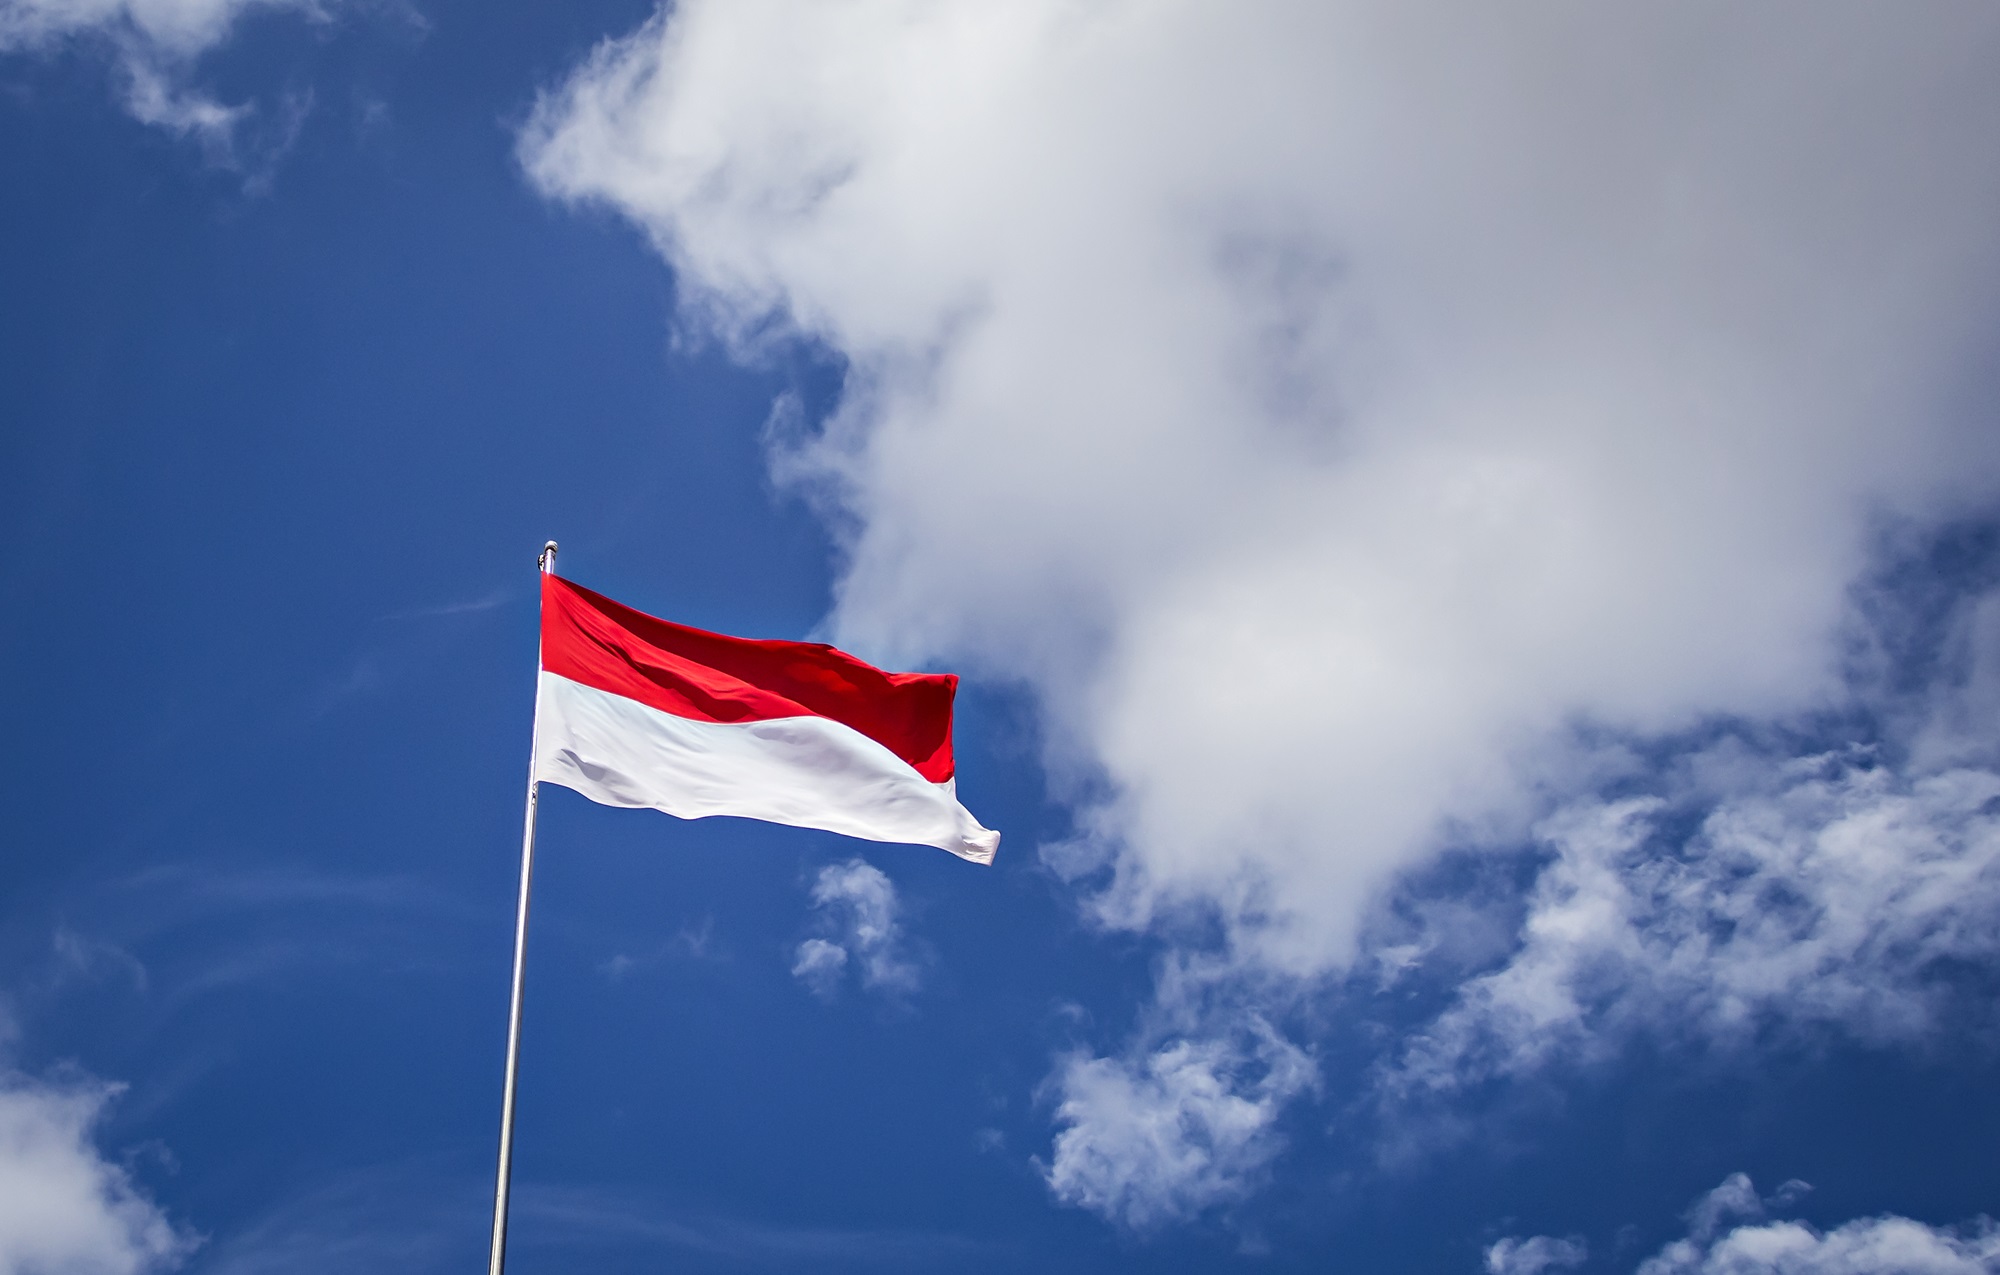 A Teacher Fixes An Upside-Down Indonesian Flag In Thailand